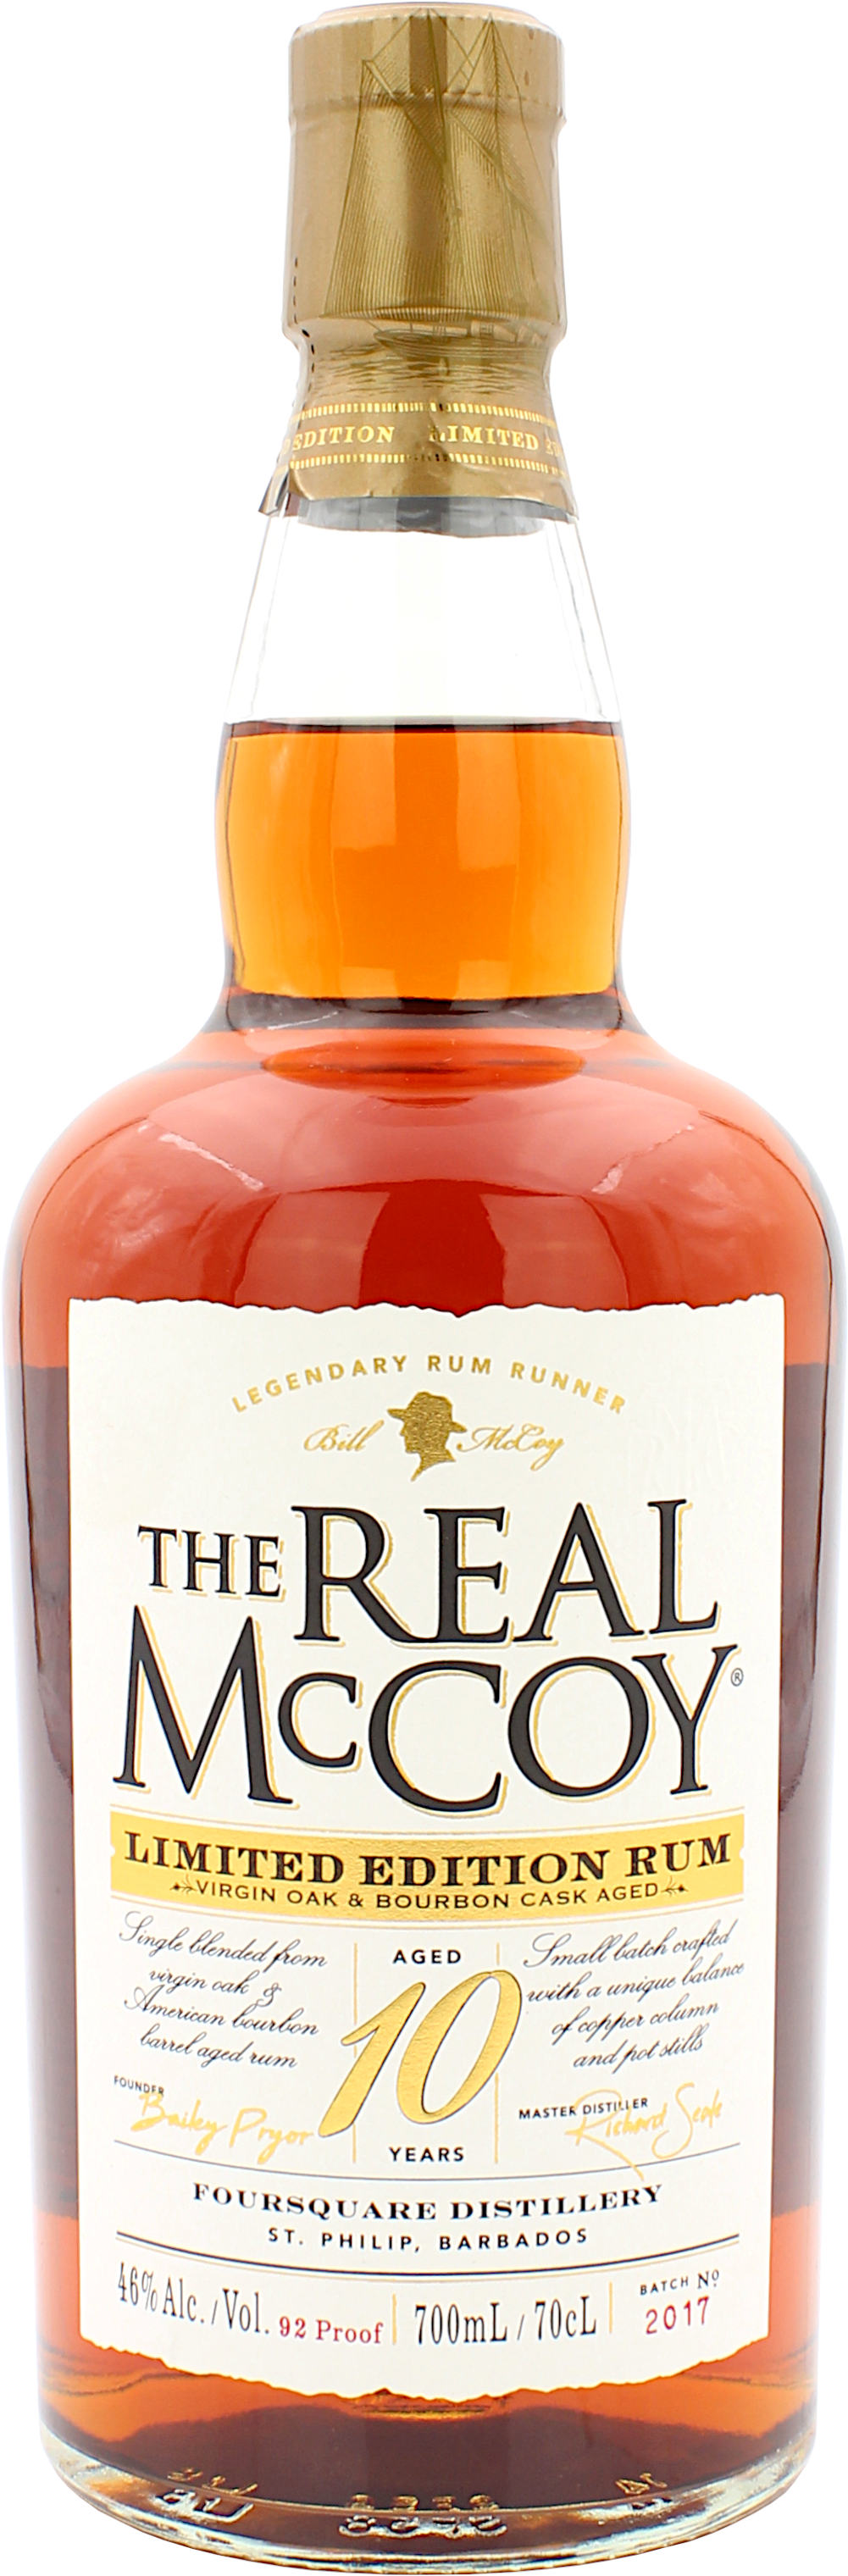 The Real McCoy Rum 10 Jahre Limited Edition Virgin Oak Cask 46.0% 0,7l